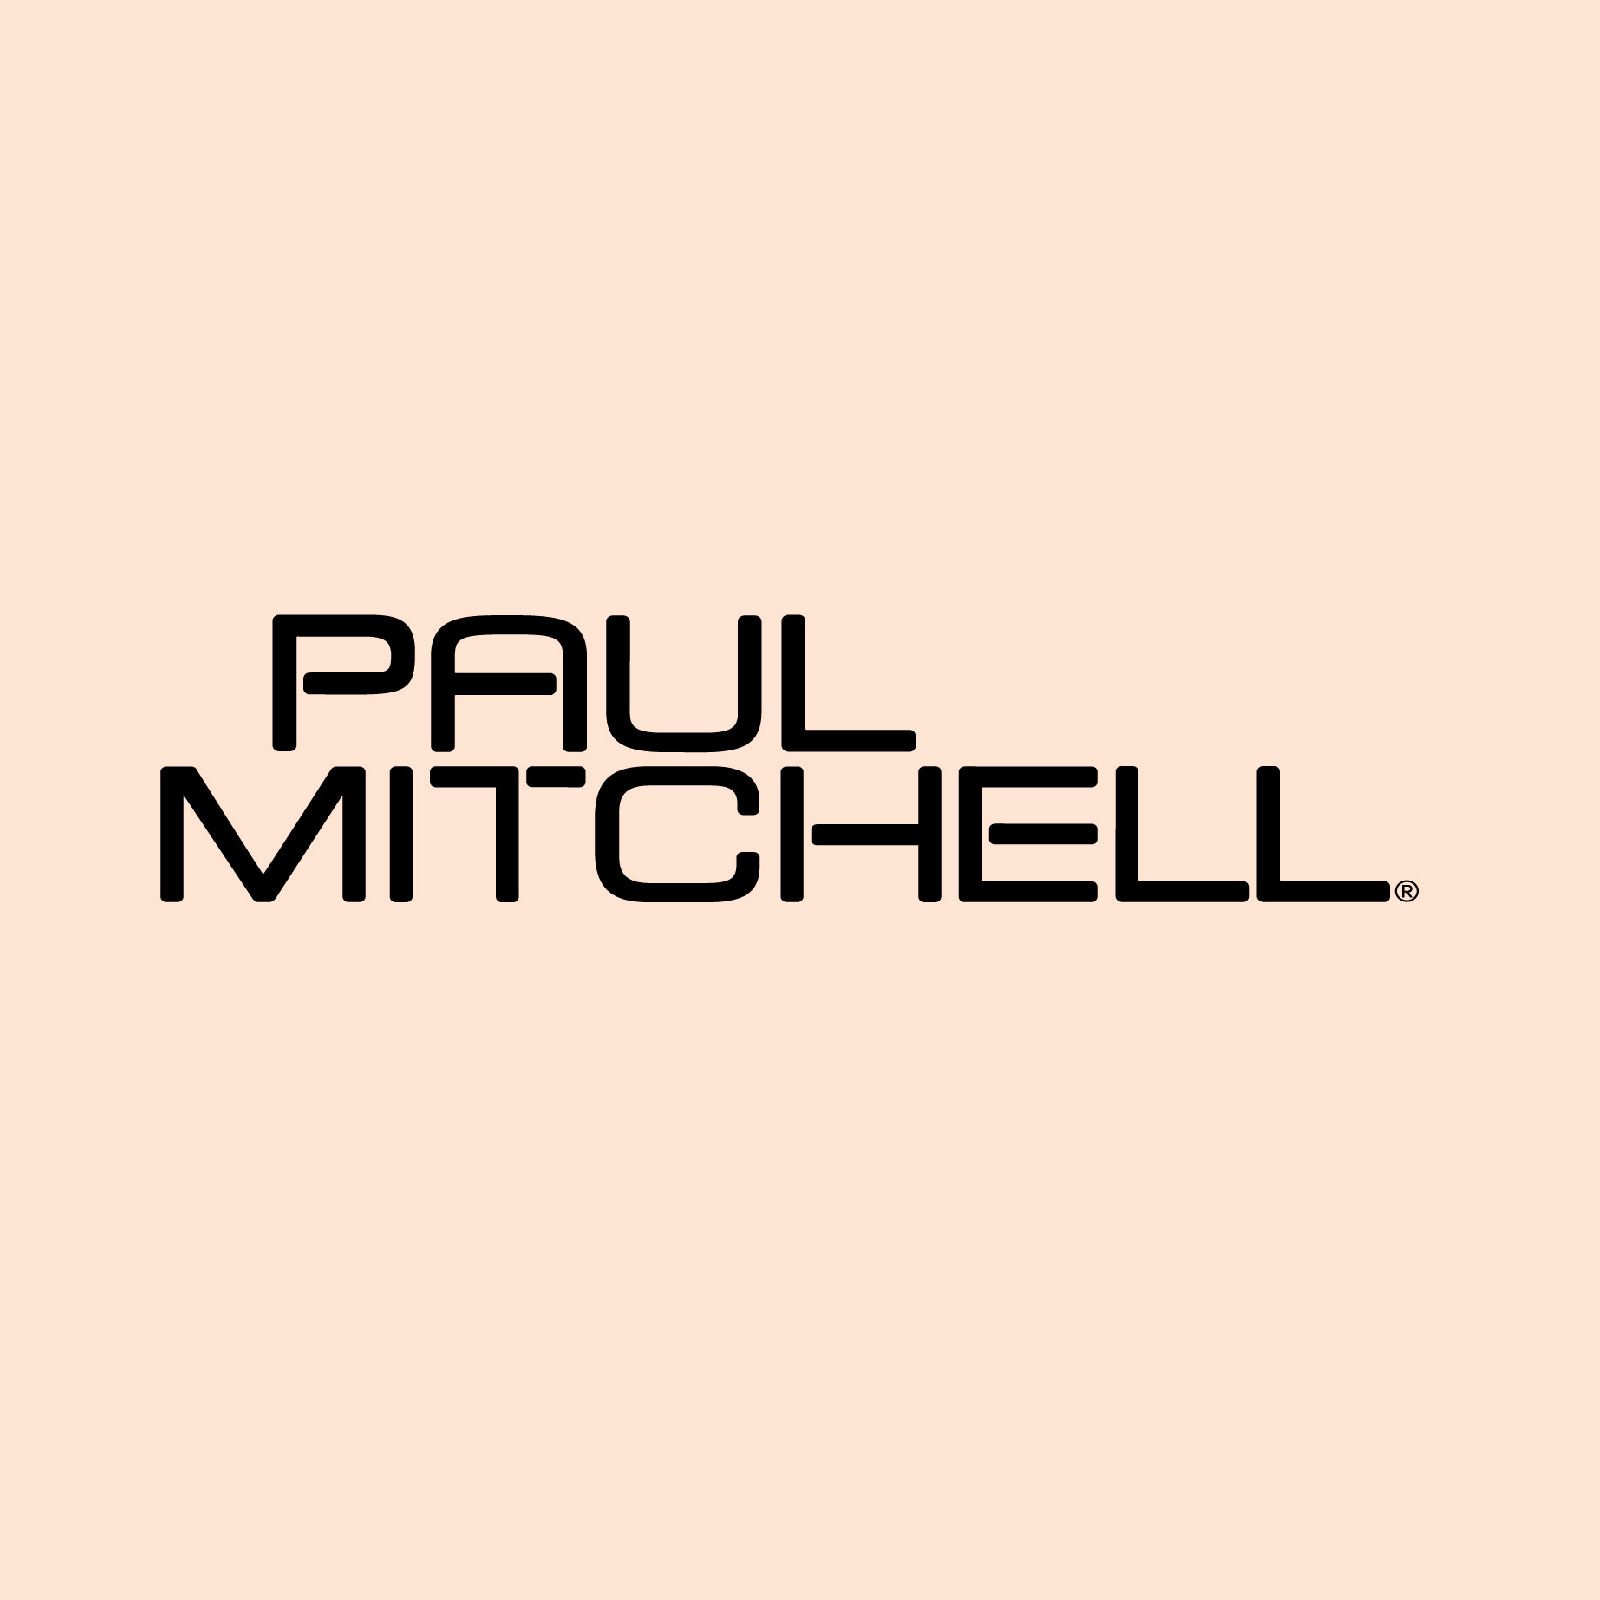 Paul Mitchell, Professional Salon Hair Care